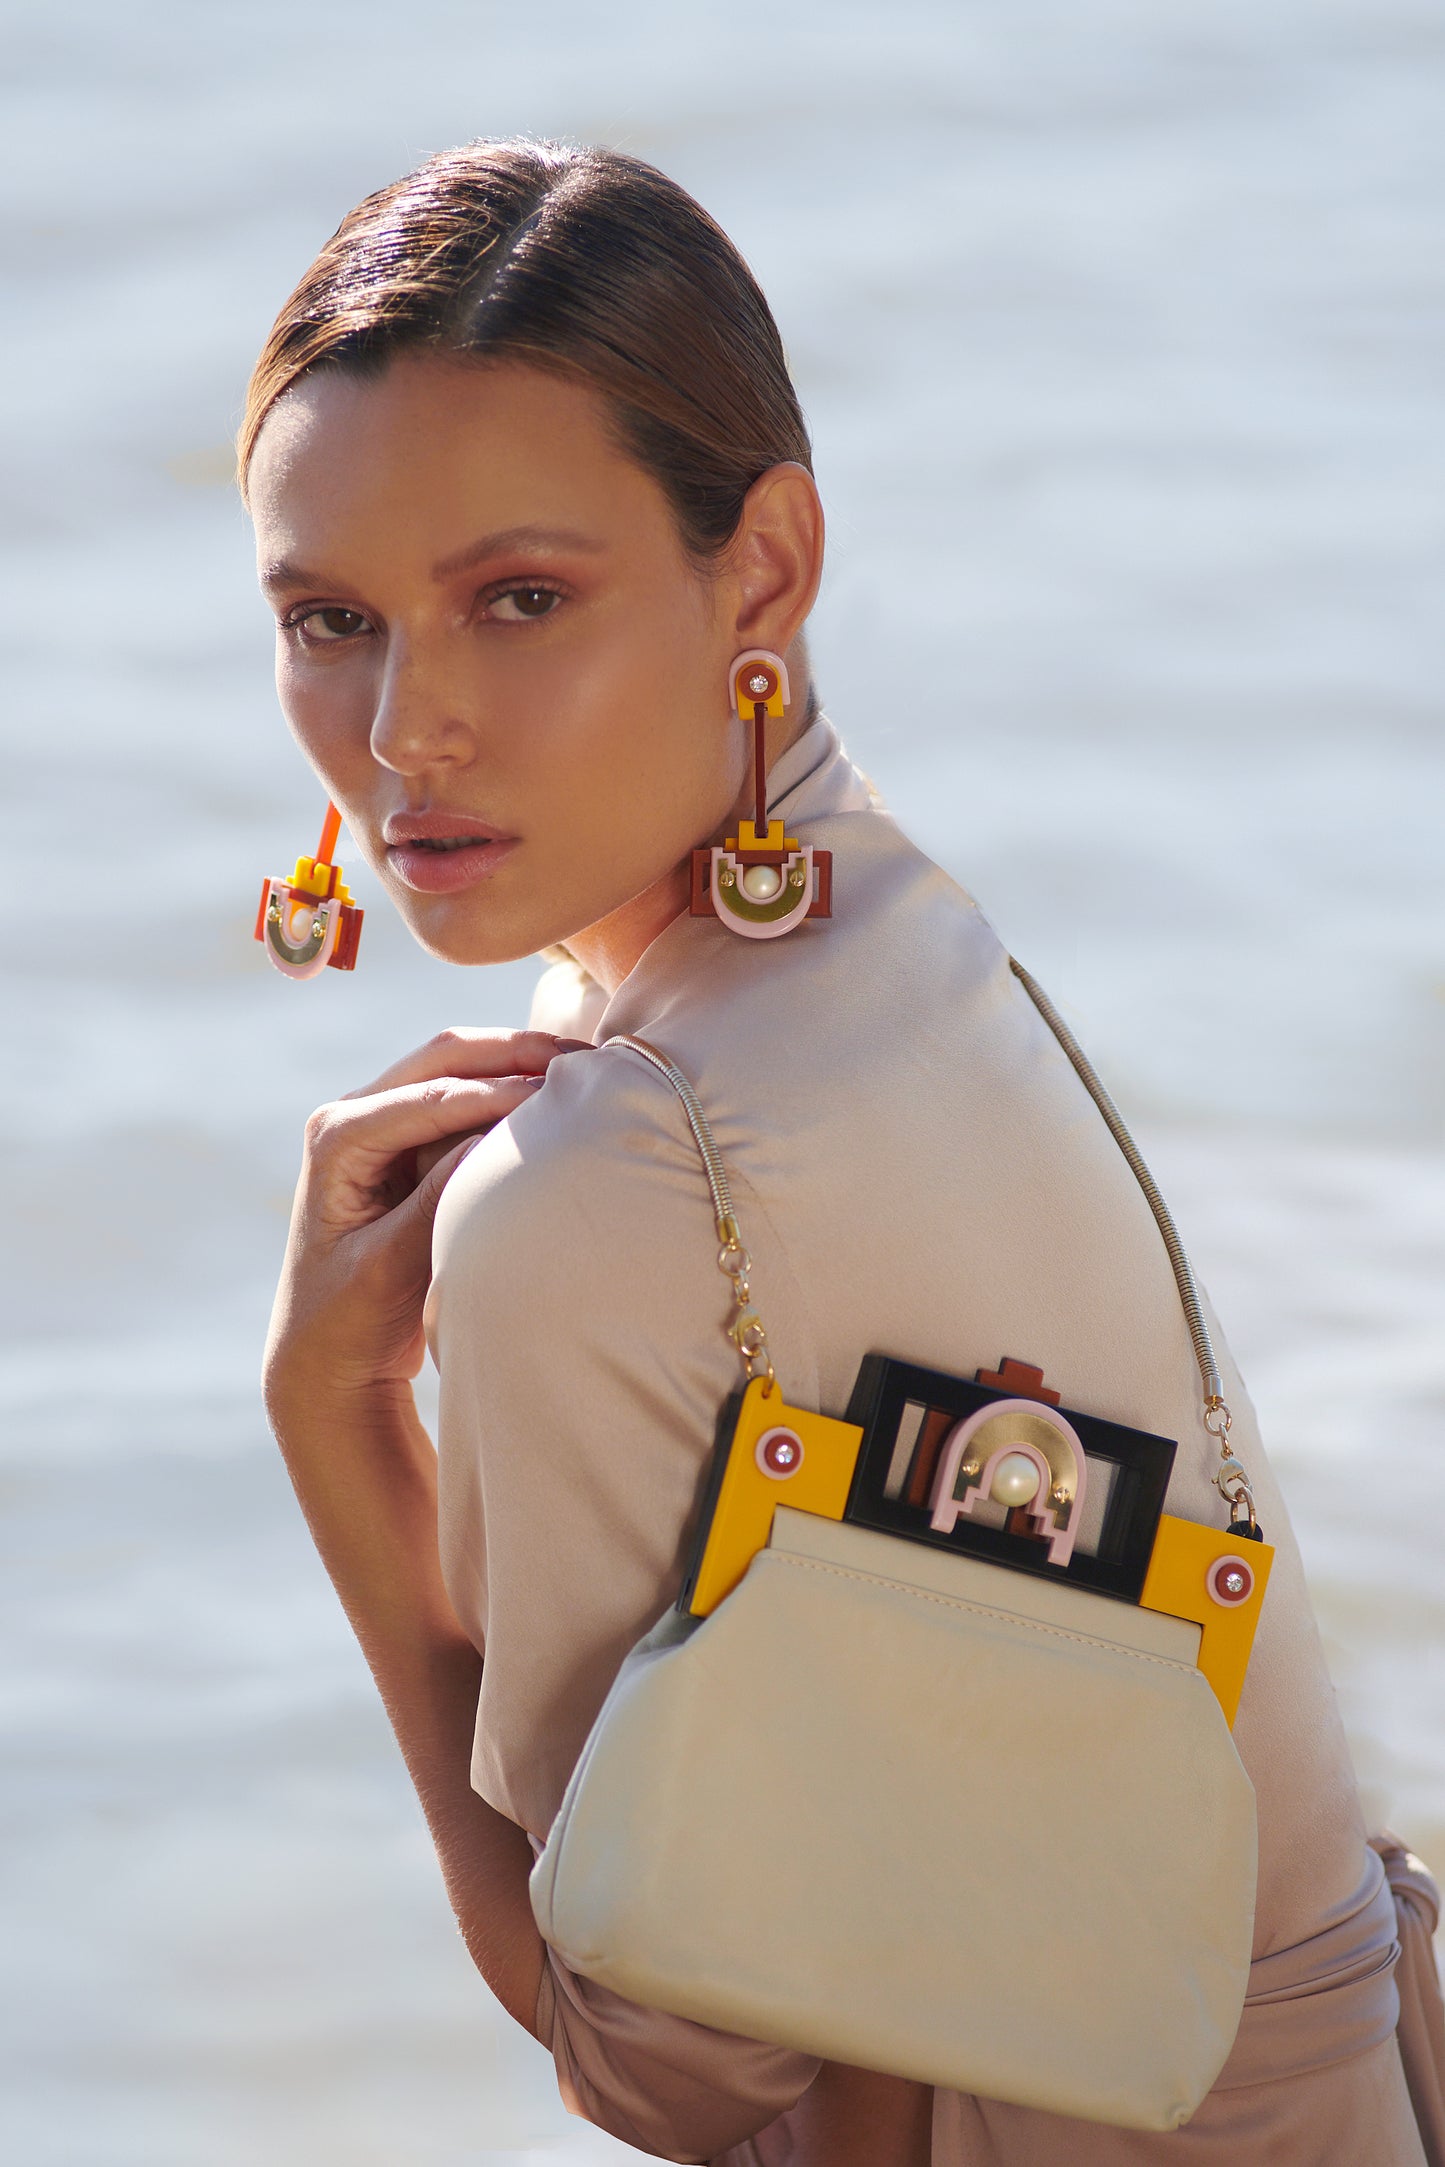 Cluth Bag Maya BEIGE / YELLOW - Neena Jewellery 